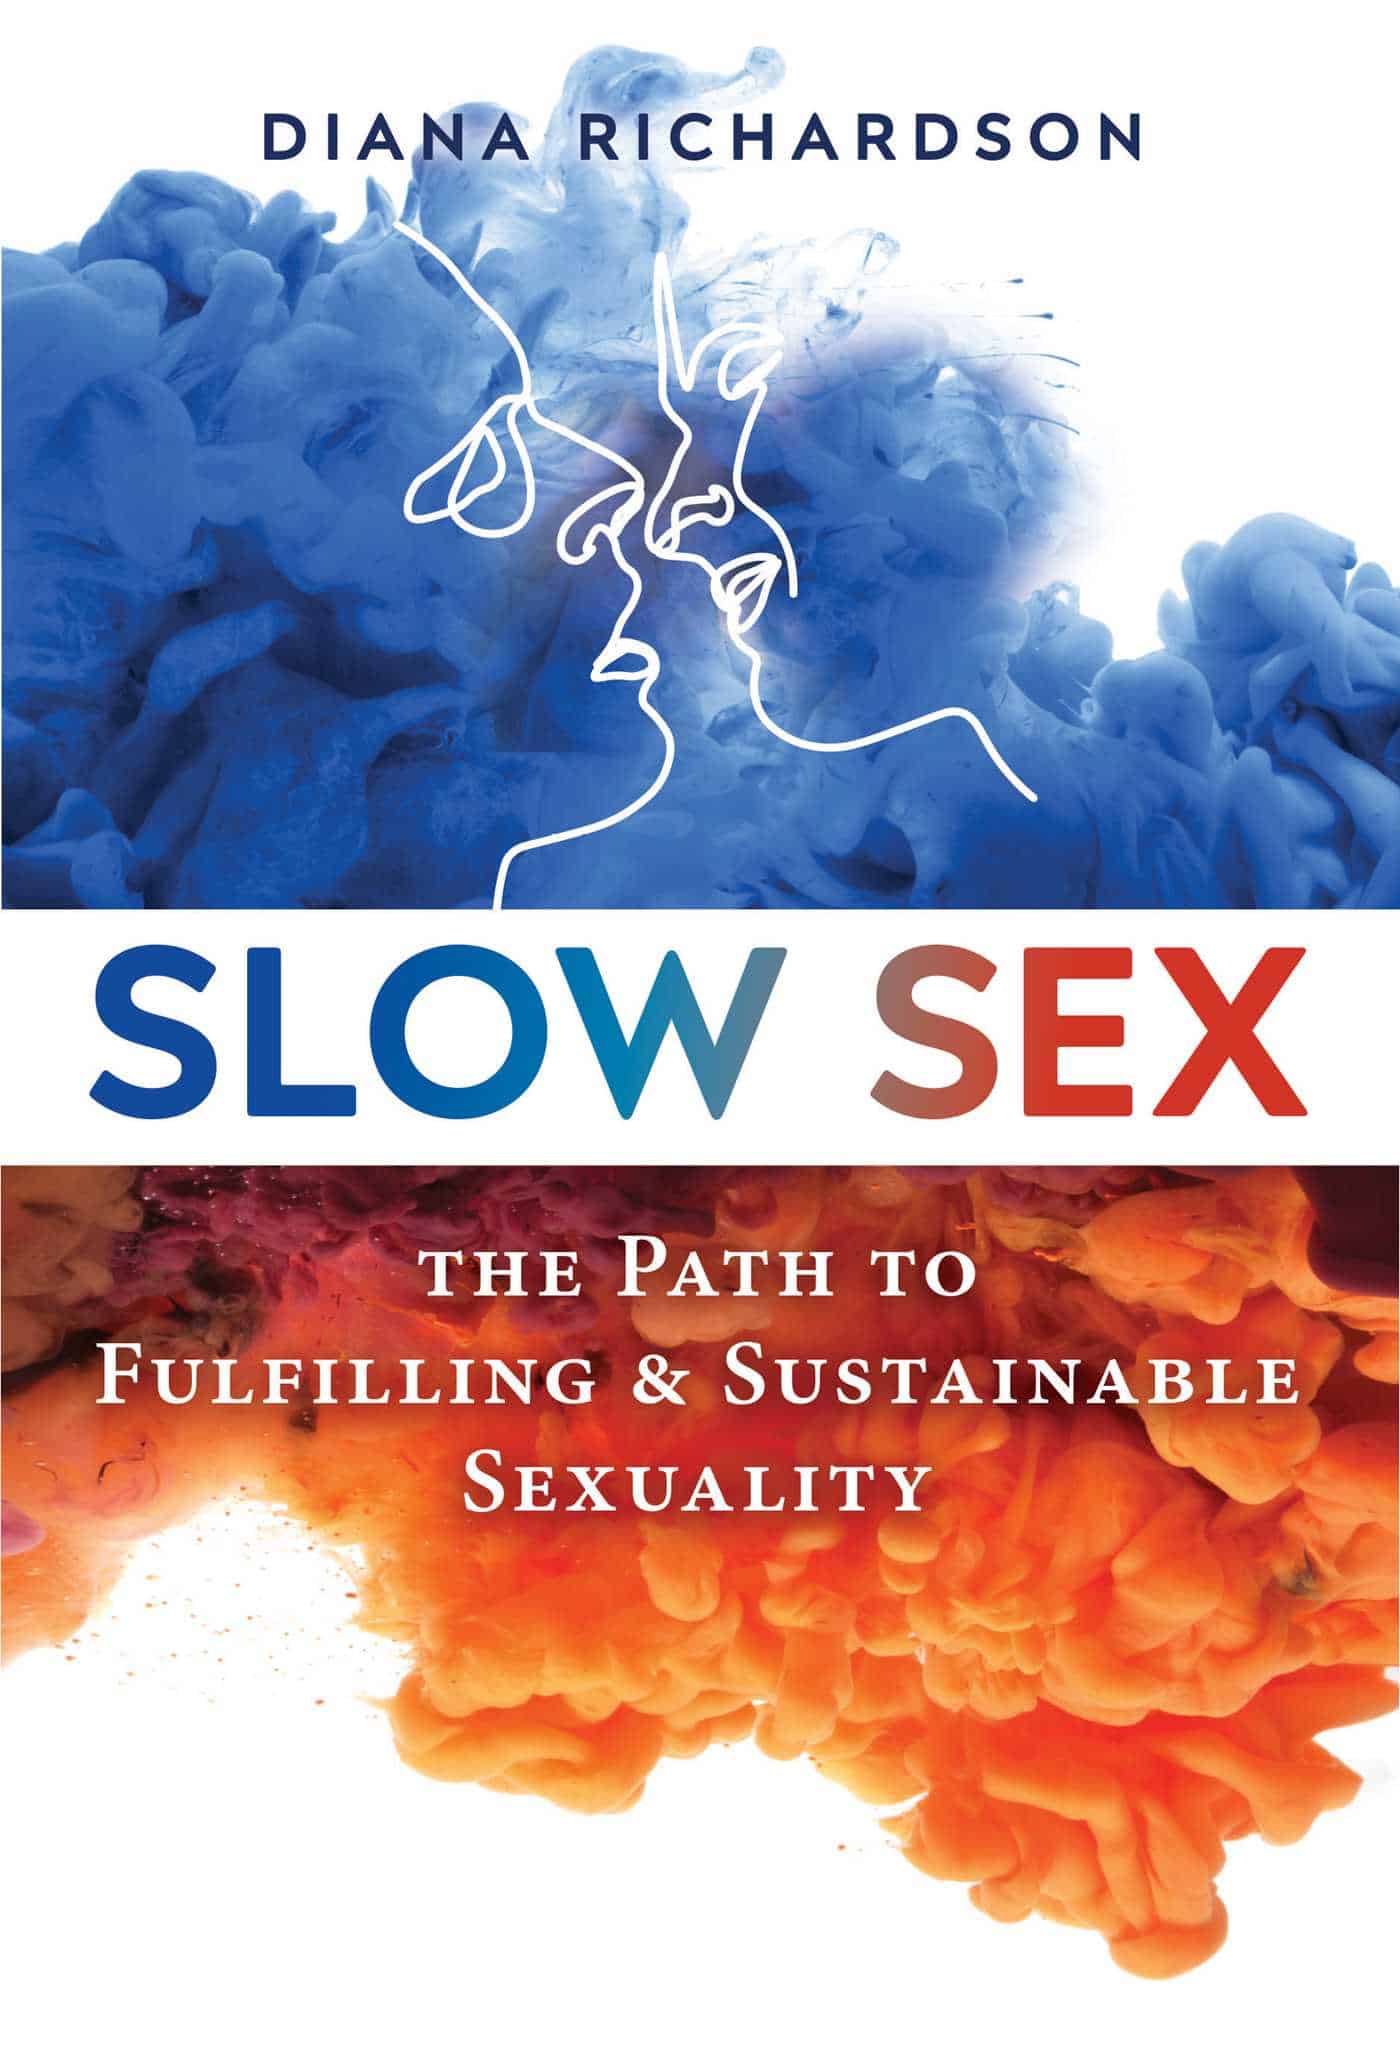 Slow Sex by Diana Richardson